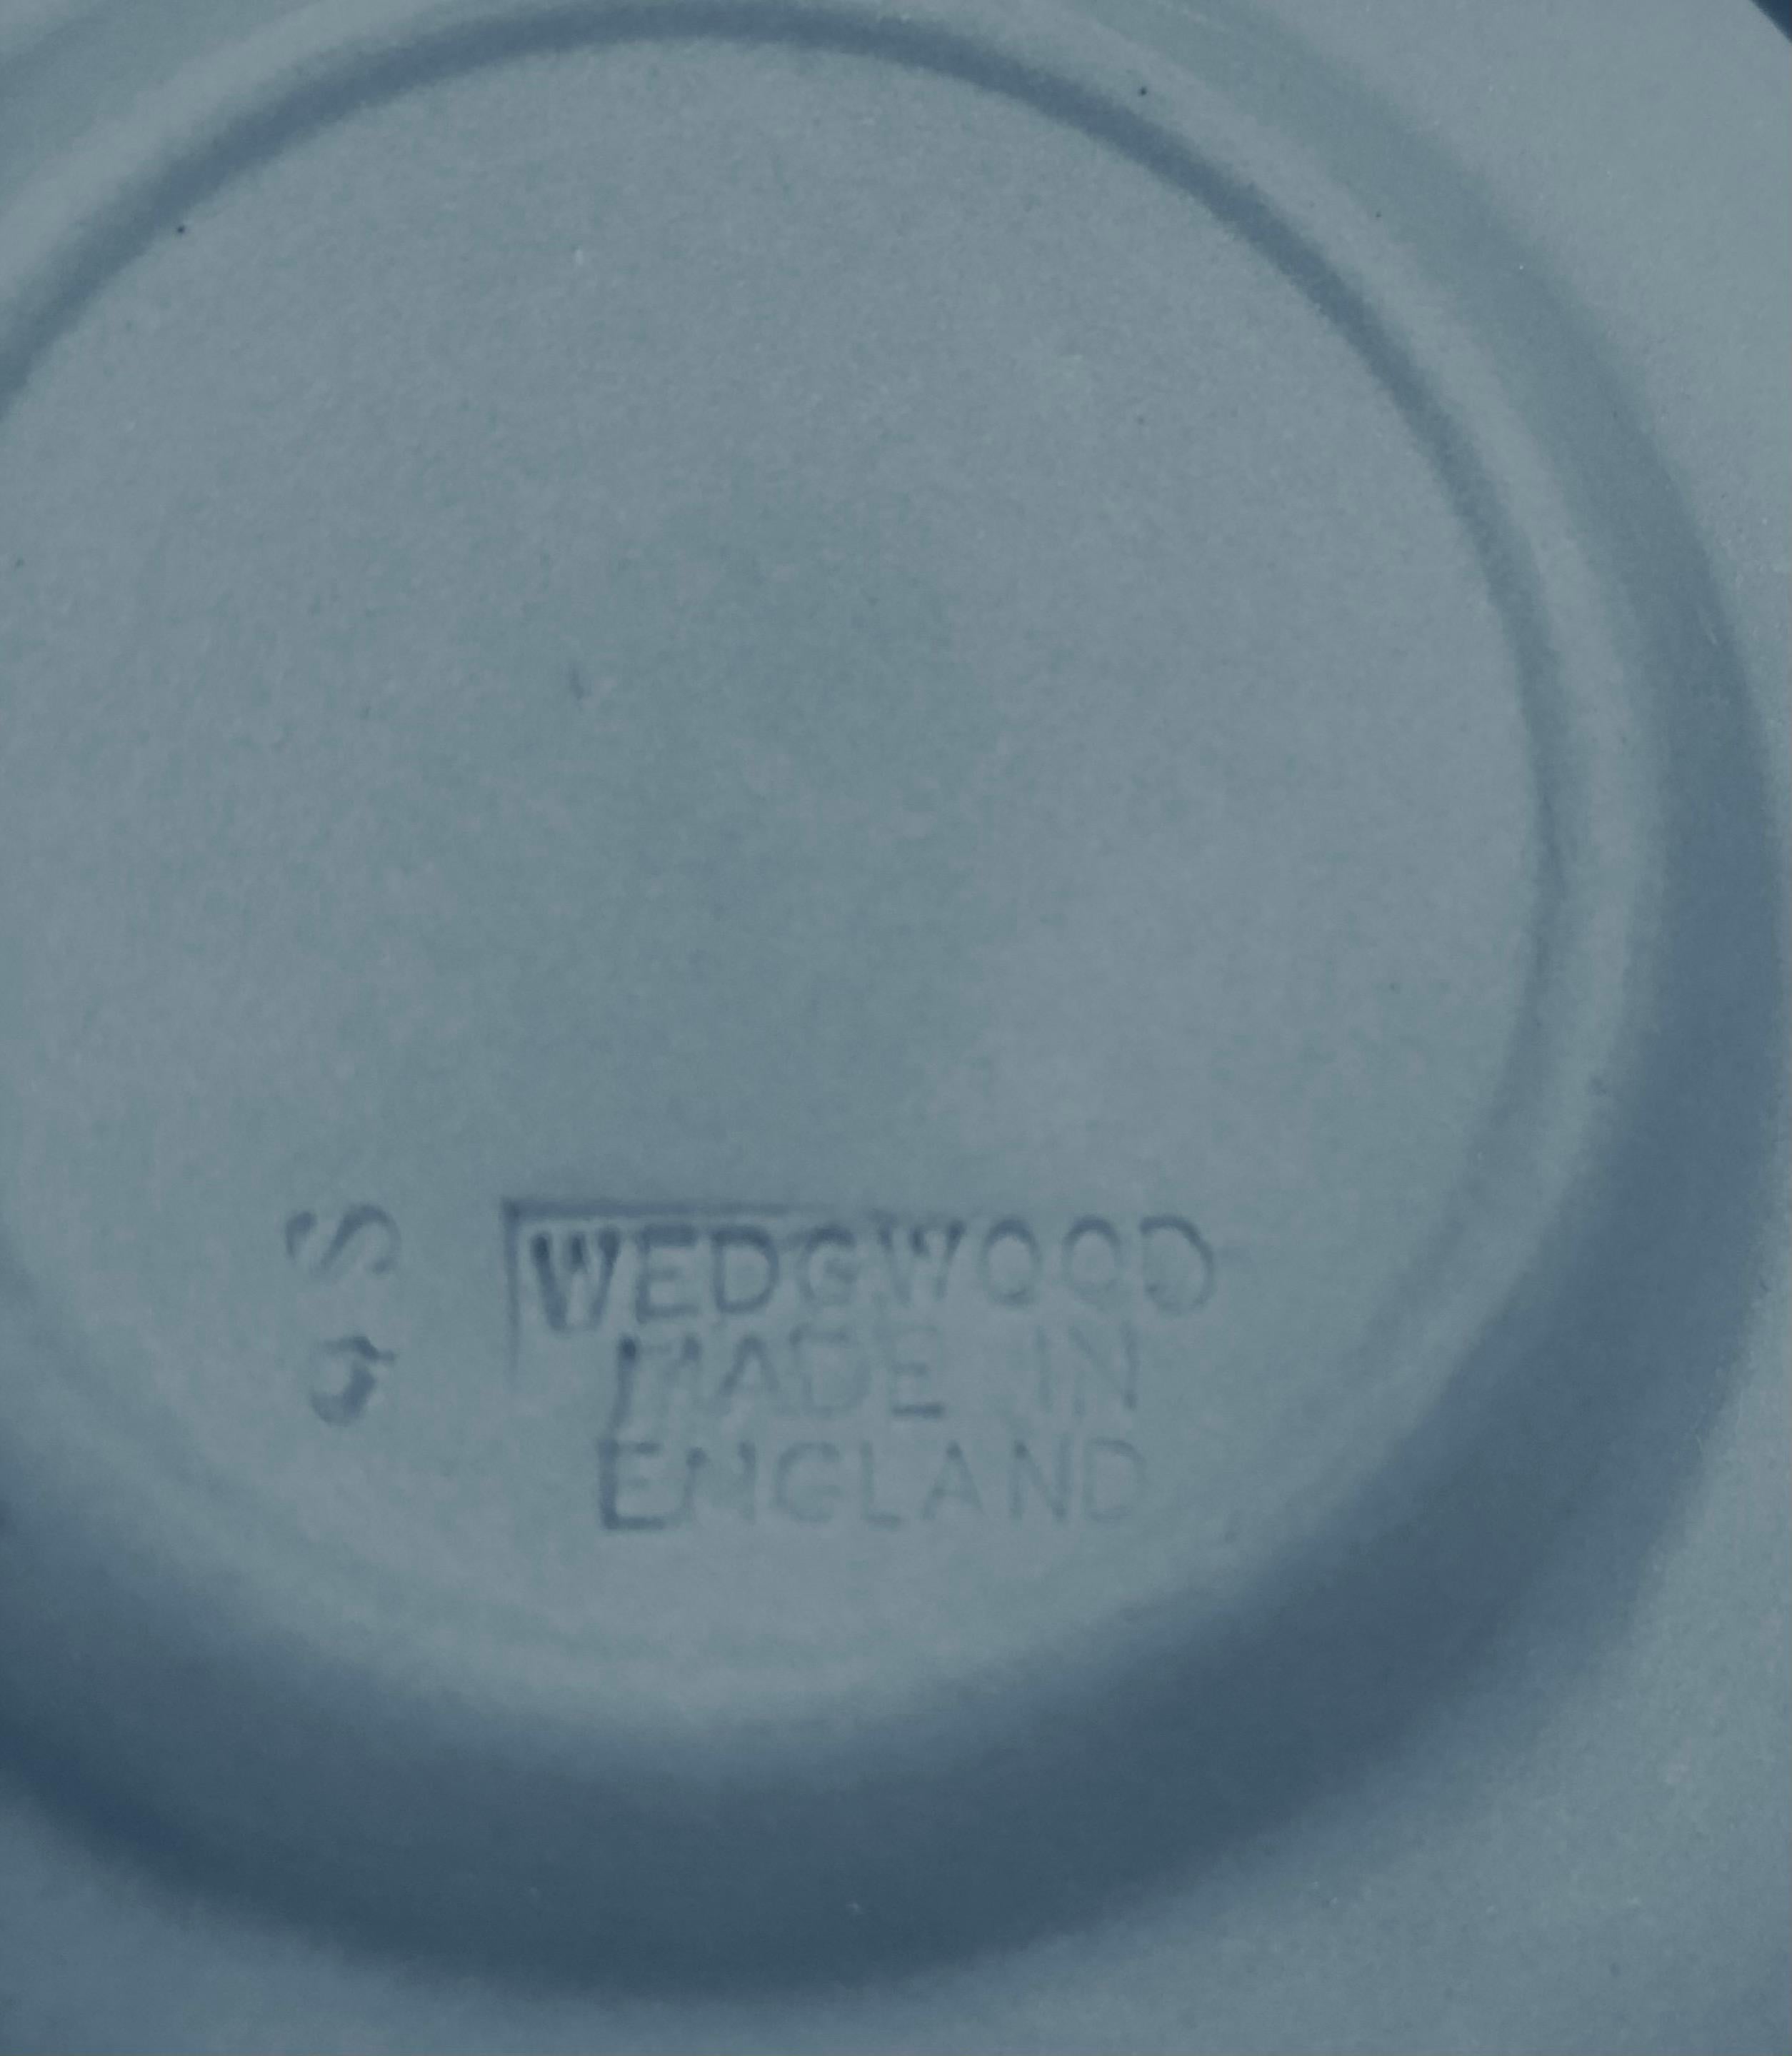 English Wedgwood Blue Jasperware Decorative Small Plates, Set of 6 4